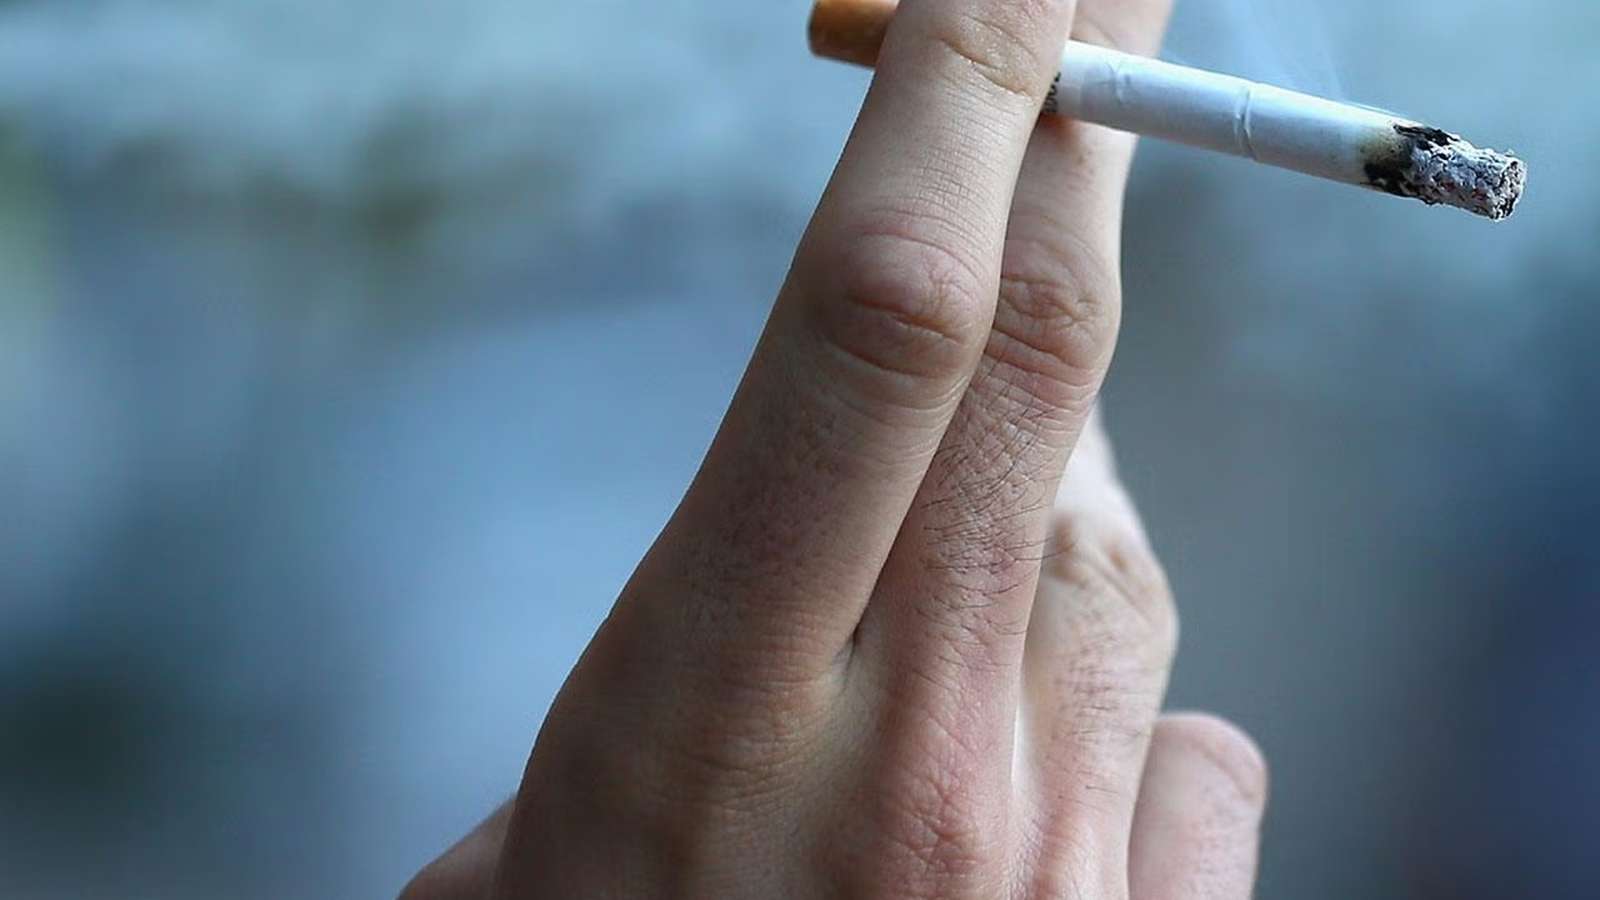 Fumar faz mal à saúde puzzle online a partir de fotografia